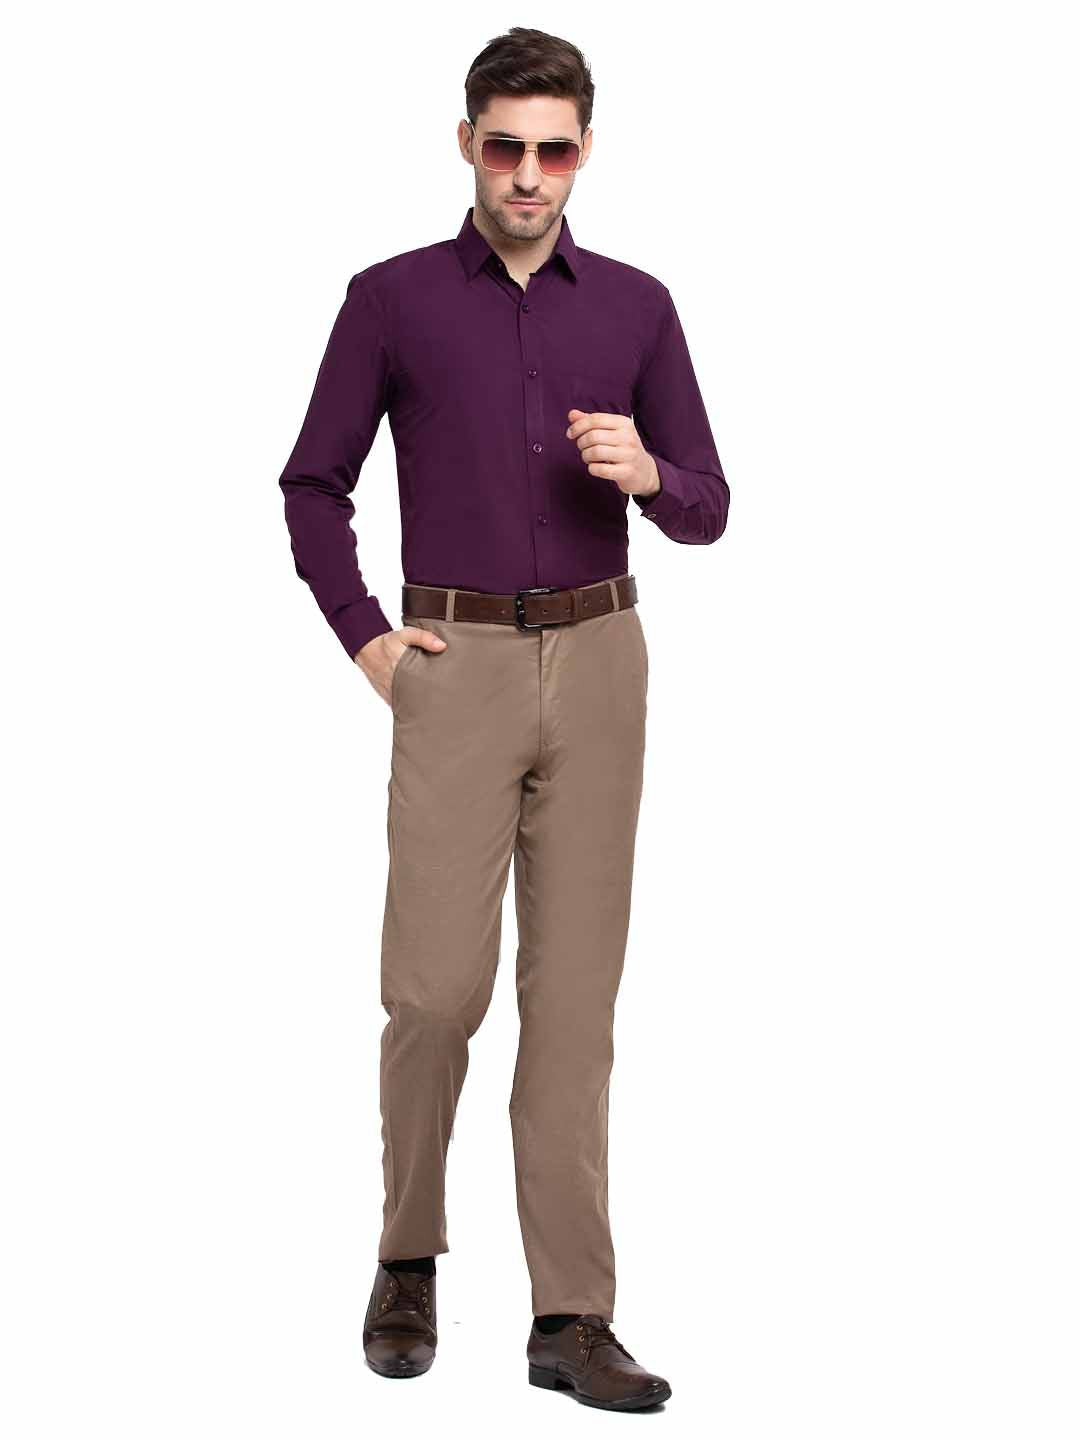 Men's Cotton Solid Burgundy Purple Formal Shirt's ( SF 361Burgundy ) - Jainish